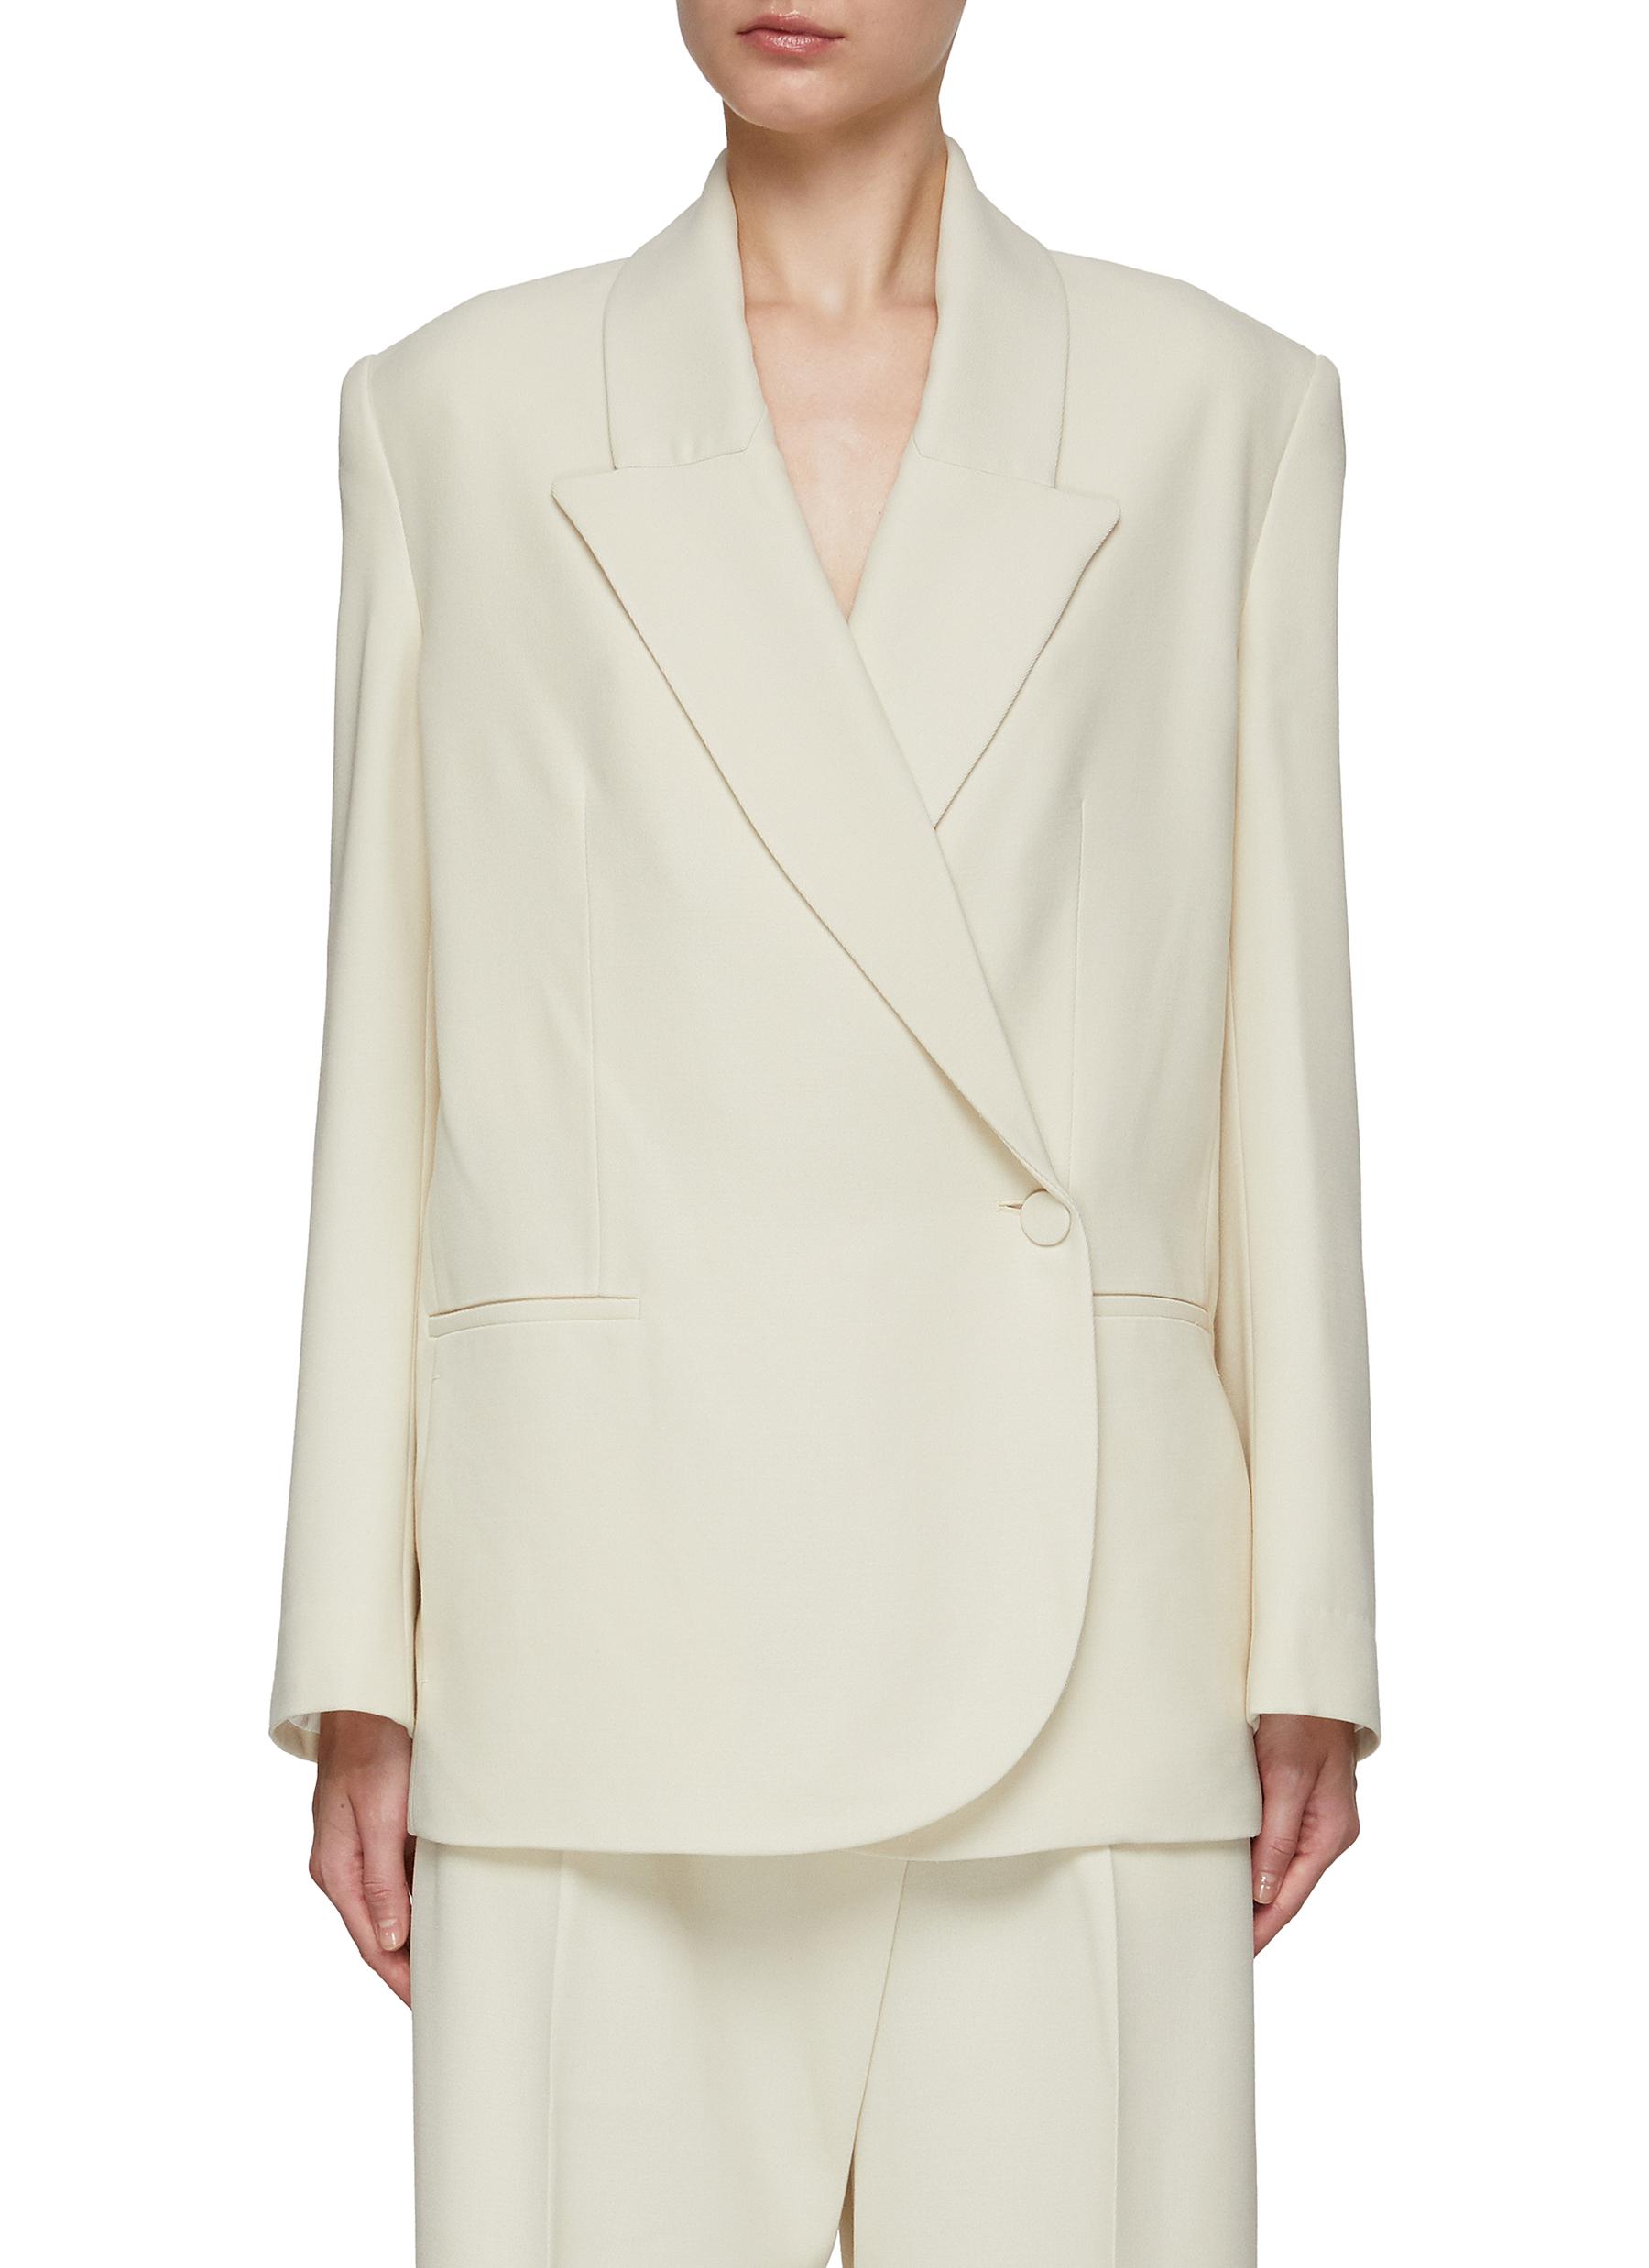 Calvin Klein Scuba Crepe 3/4-Sleeve Sheath Dress - Macy's